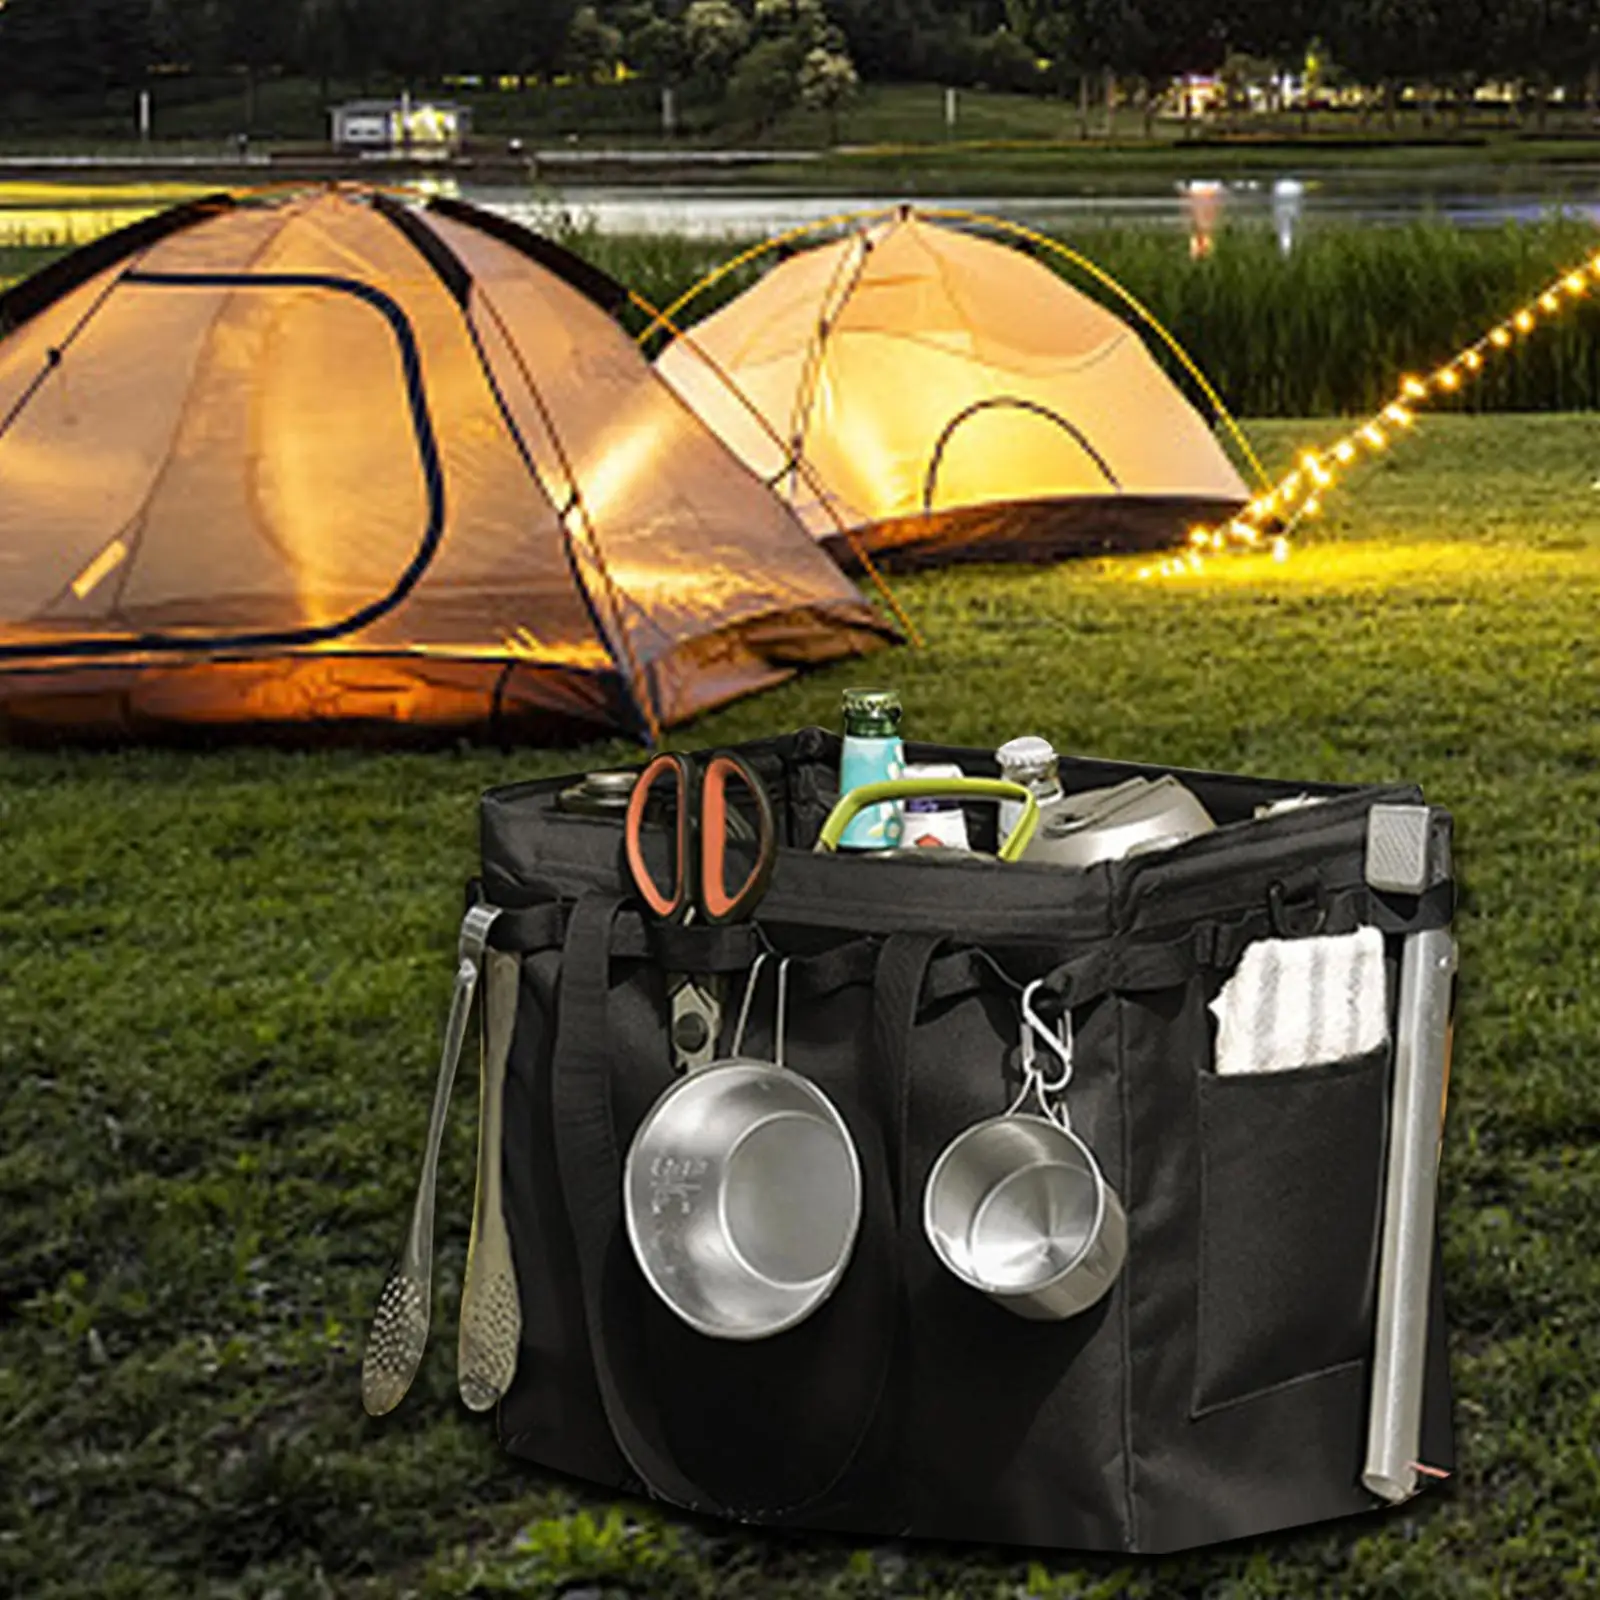 Outdoor Picnic Storage Bag Handbag Travel Garage Trunk Organizer Durable Black Practical Waterproof Large Capacity Multipurpose